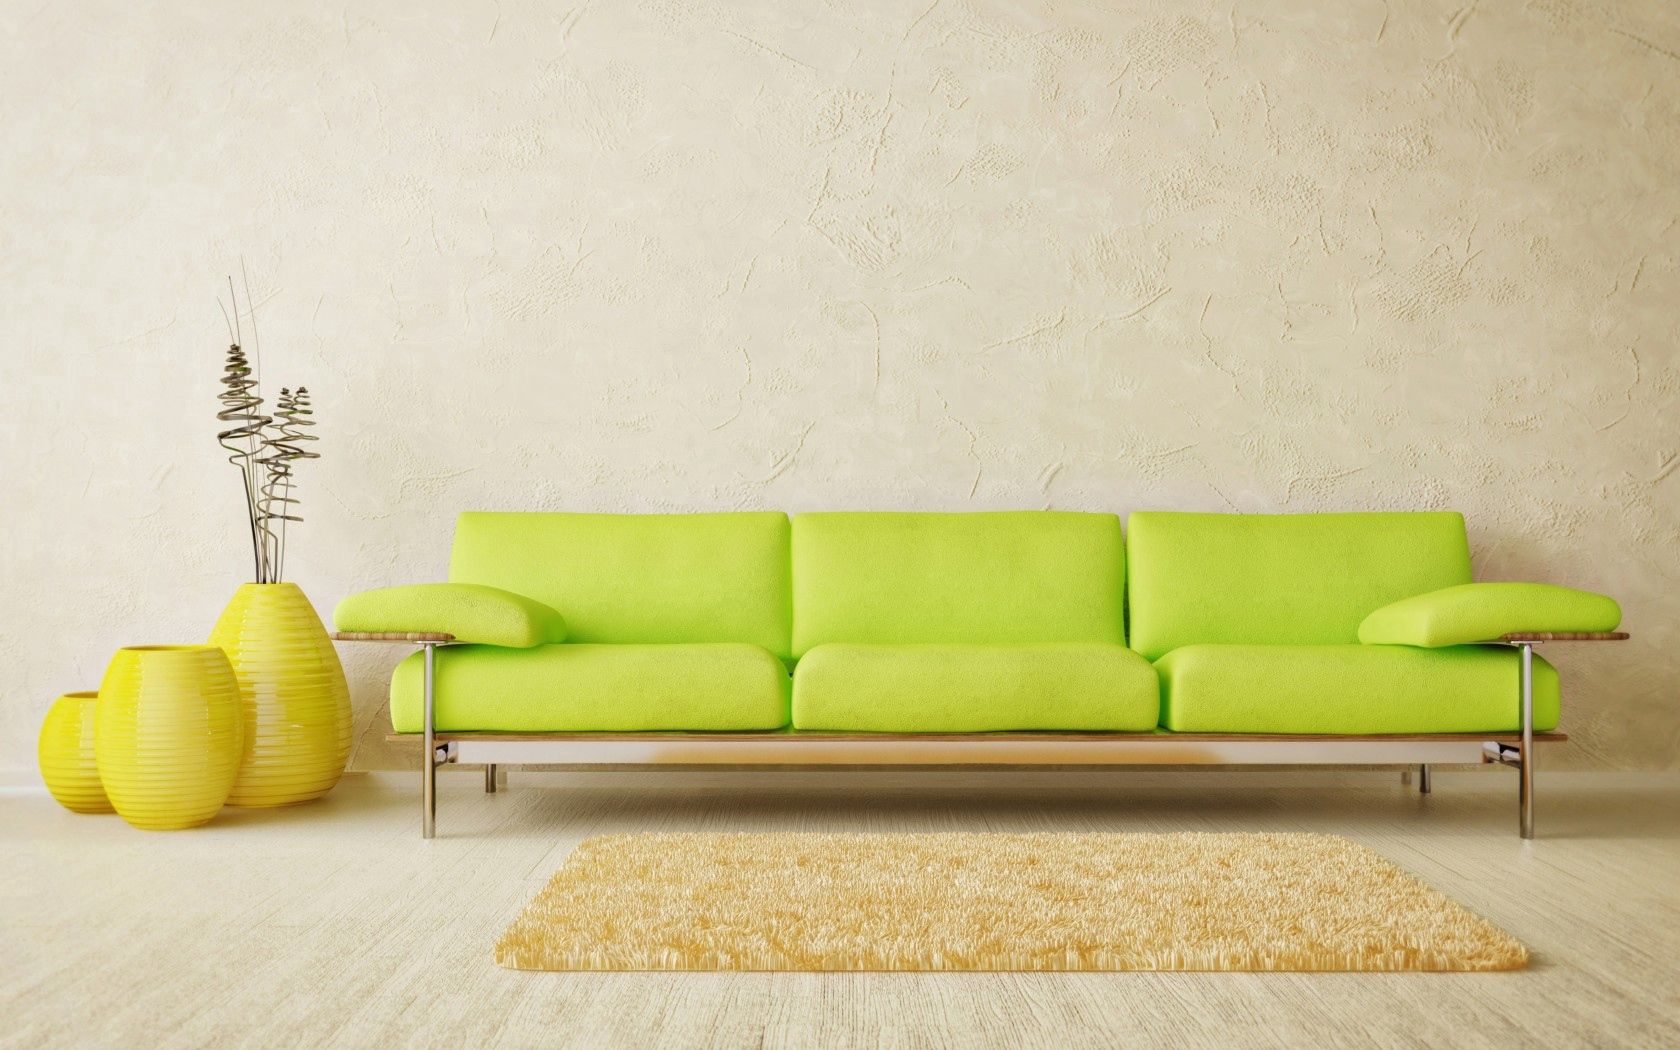 minimalism, design, sofa, interior, yellow, green, light, miscellanea, miscellaneous, light coloured, room, style, mat, vases, parquet, rug